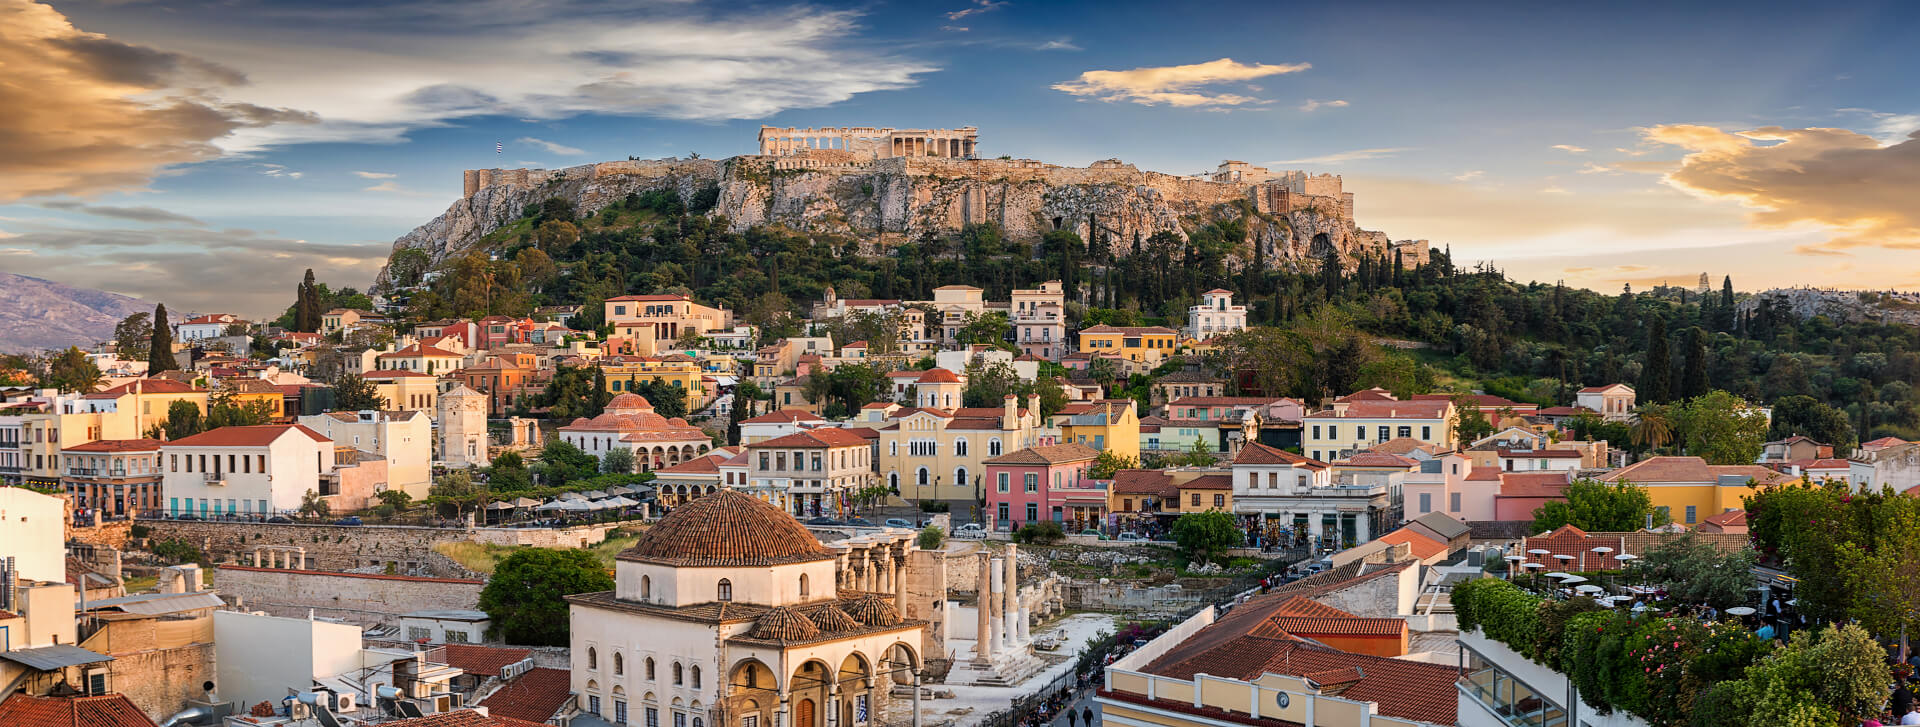 Athens popular destination